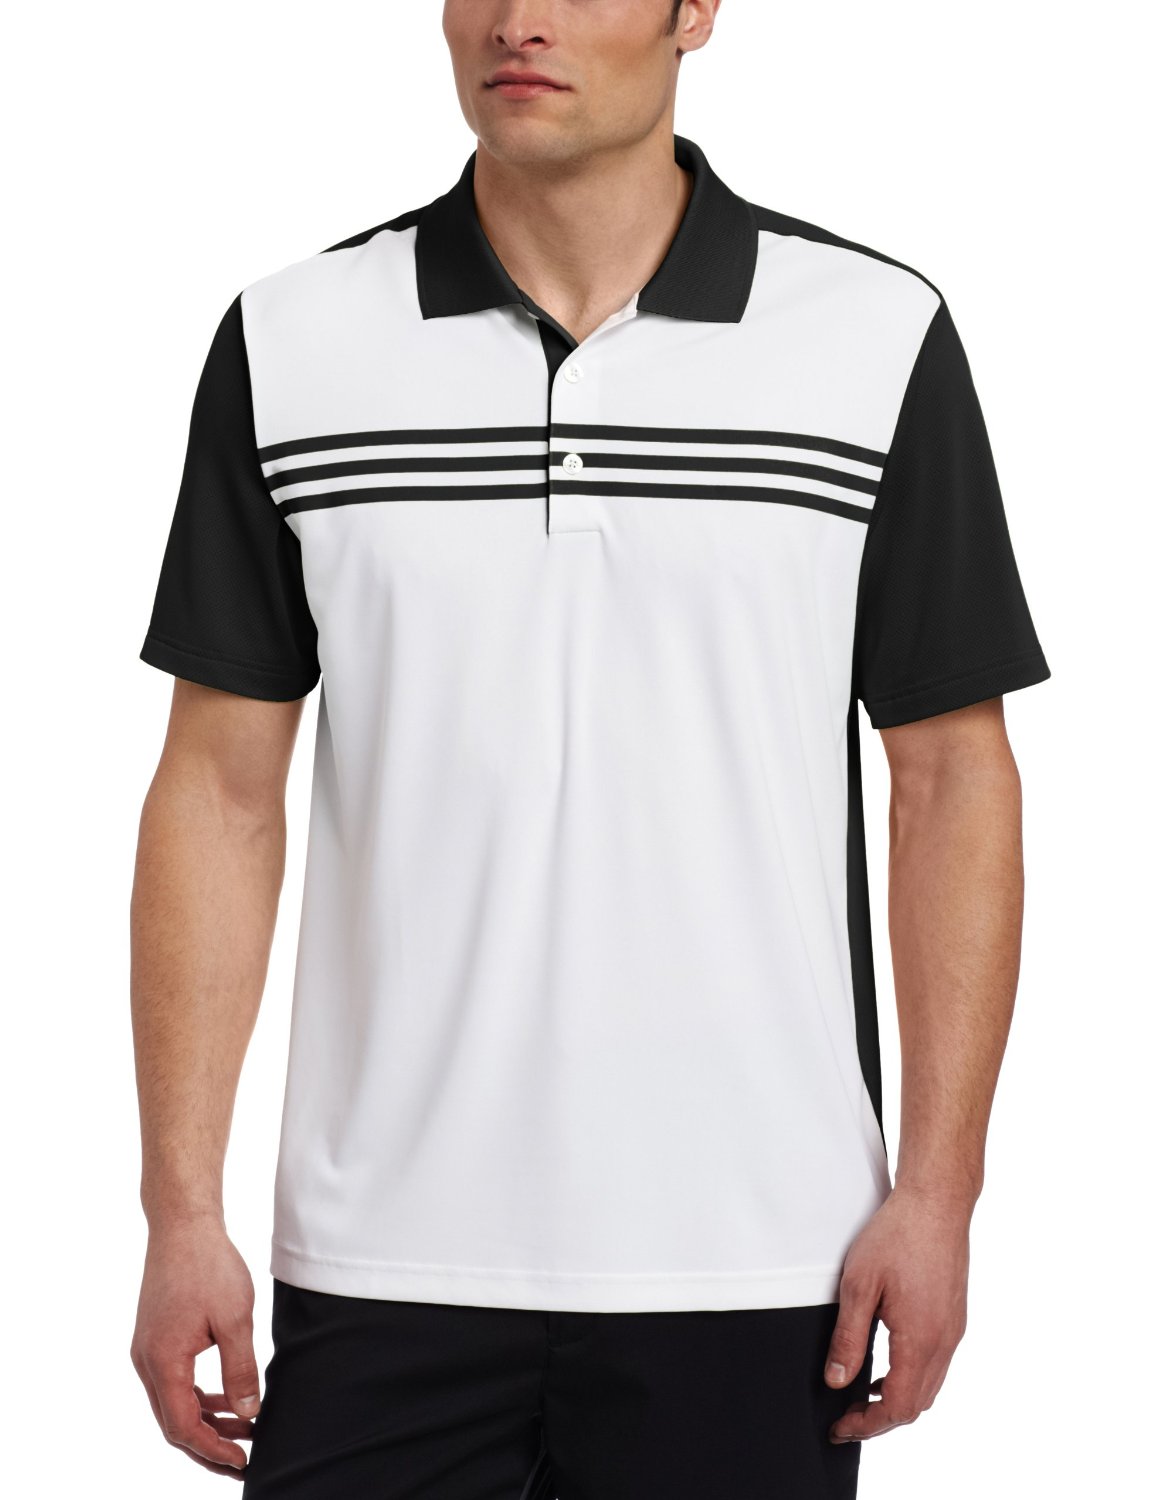 Adidas Mens Climacool 3 Stripes Color Block Polo Shirts